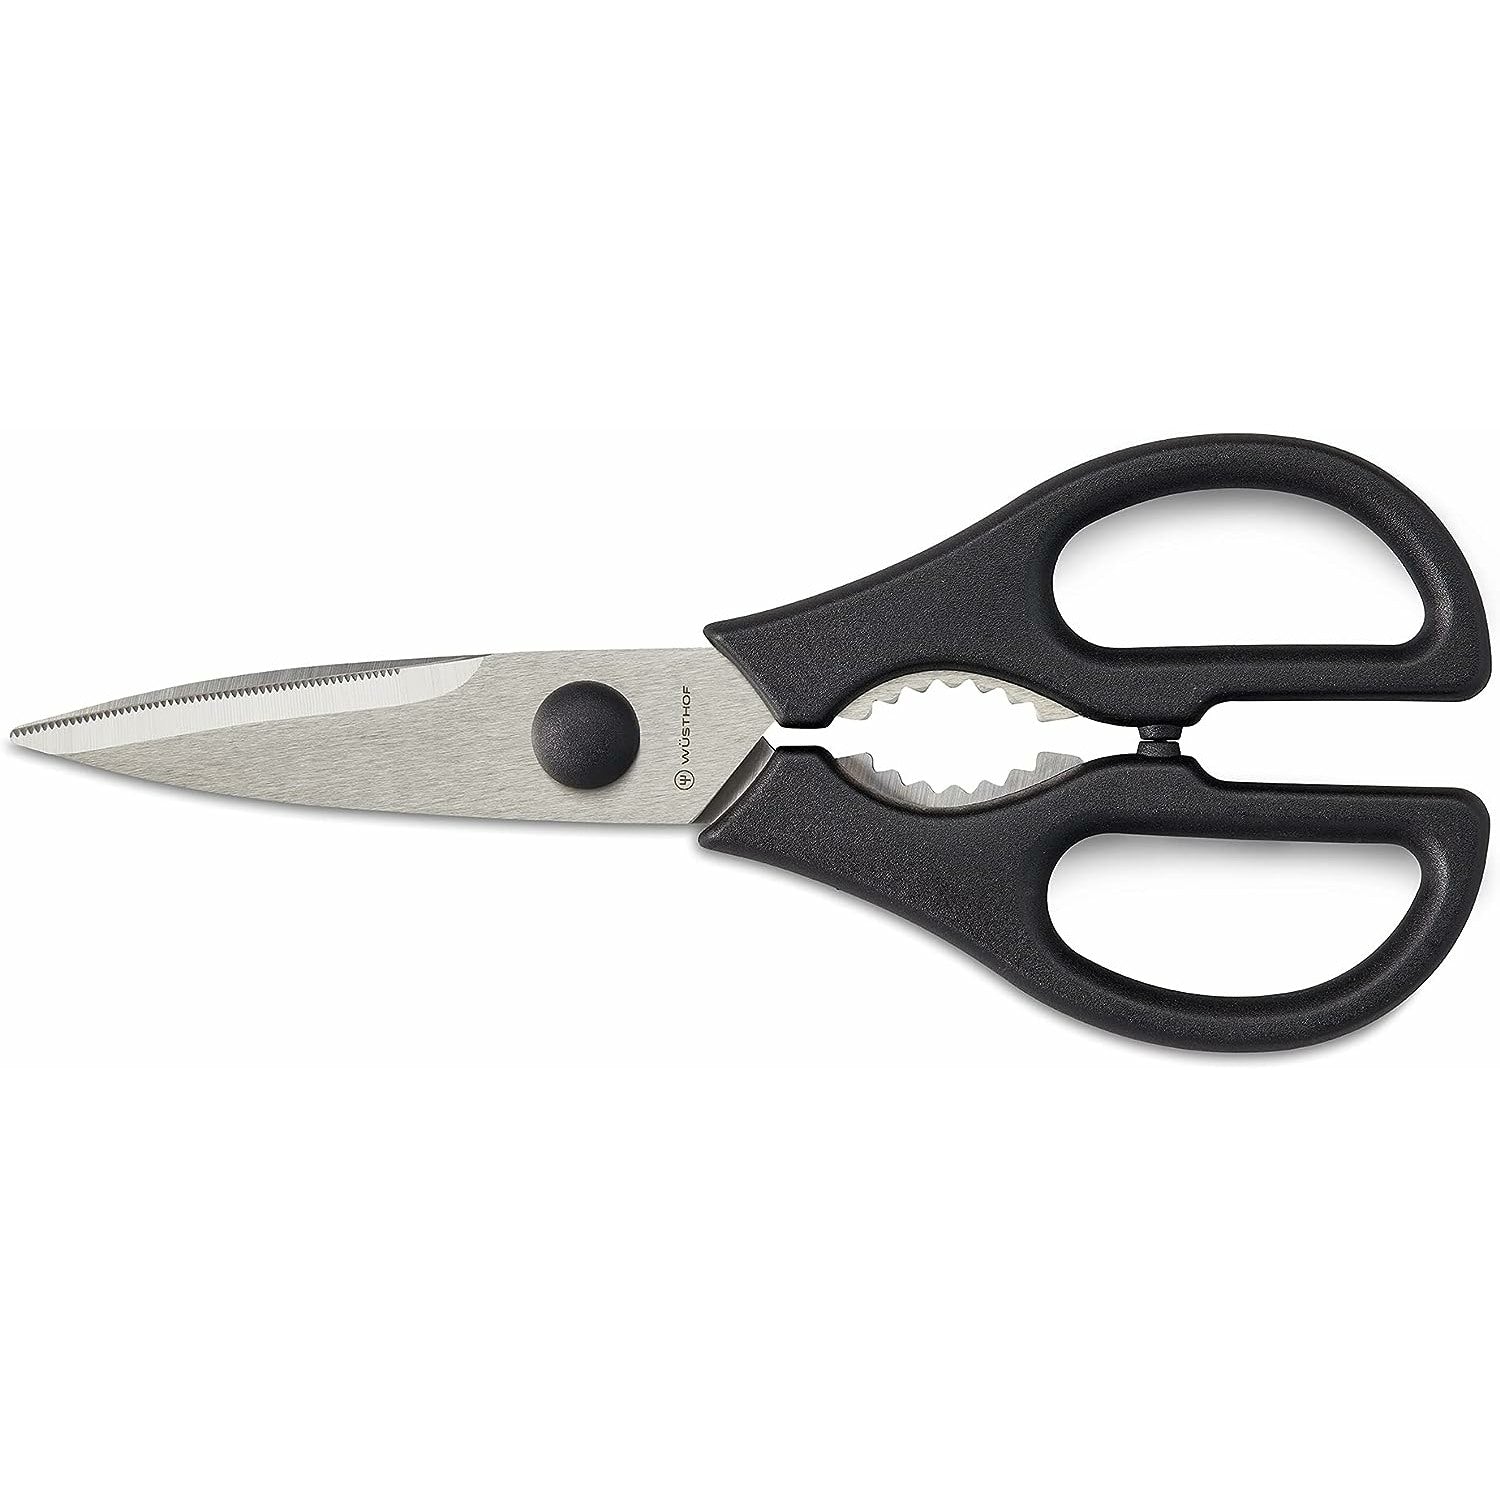 Wusthof Take-Apart Kitchen Scissors: 1049594907